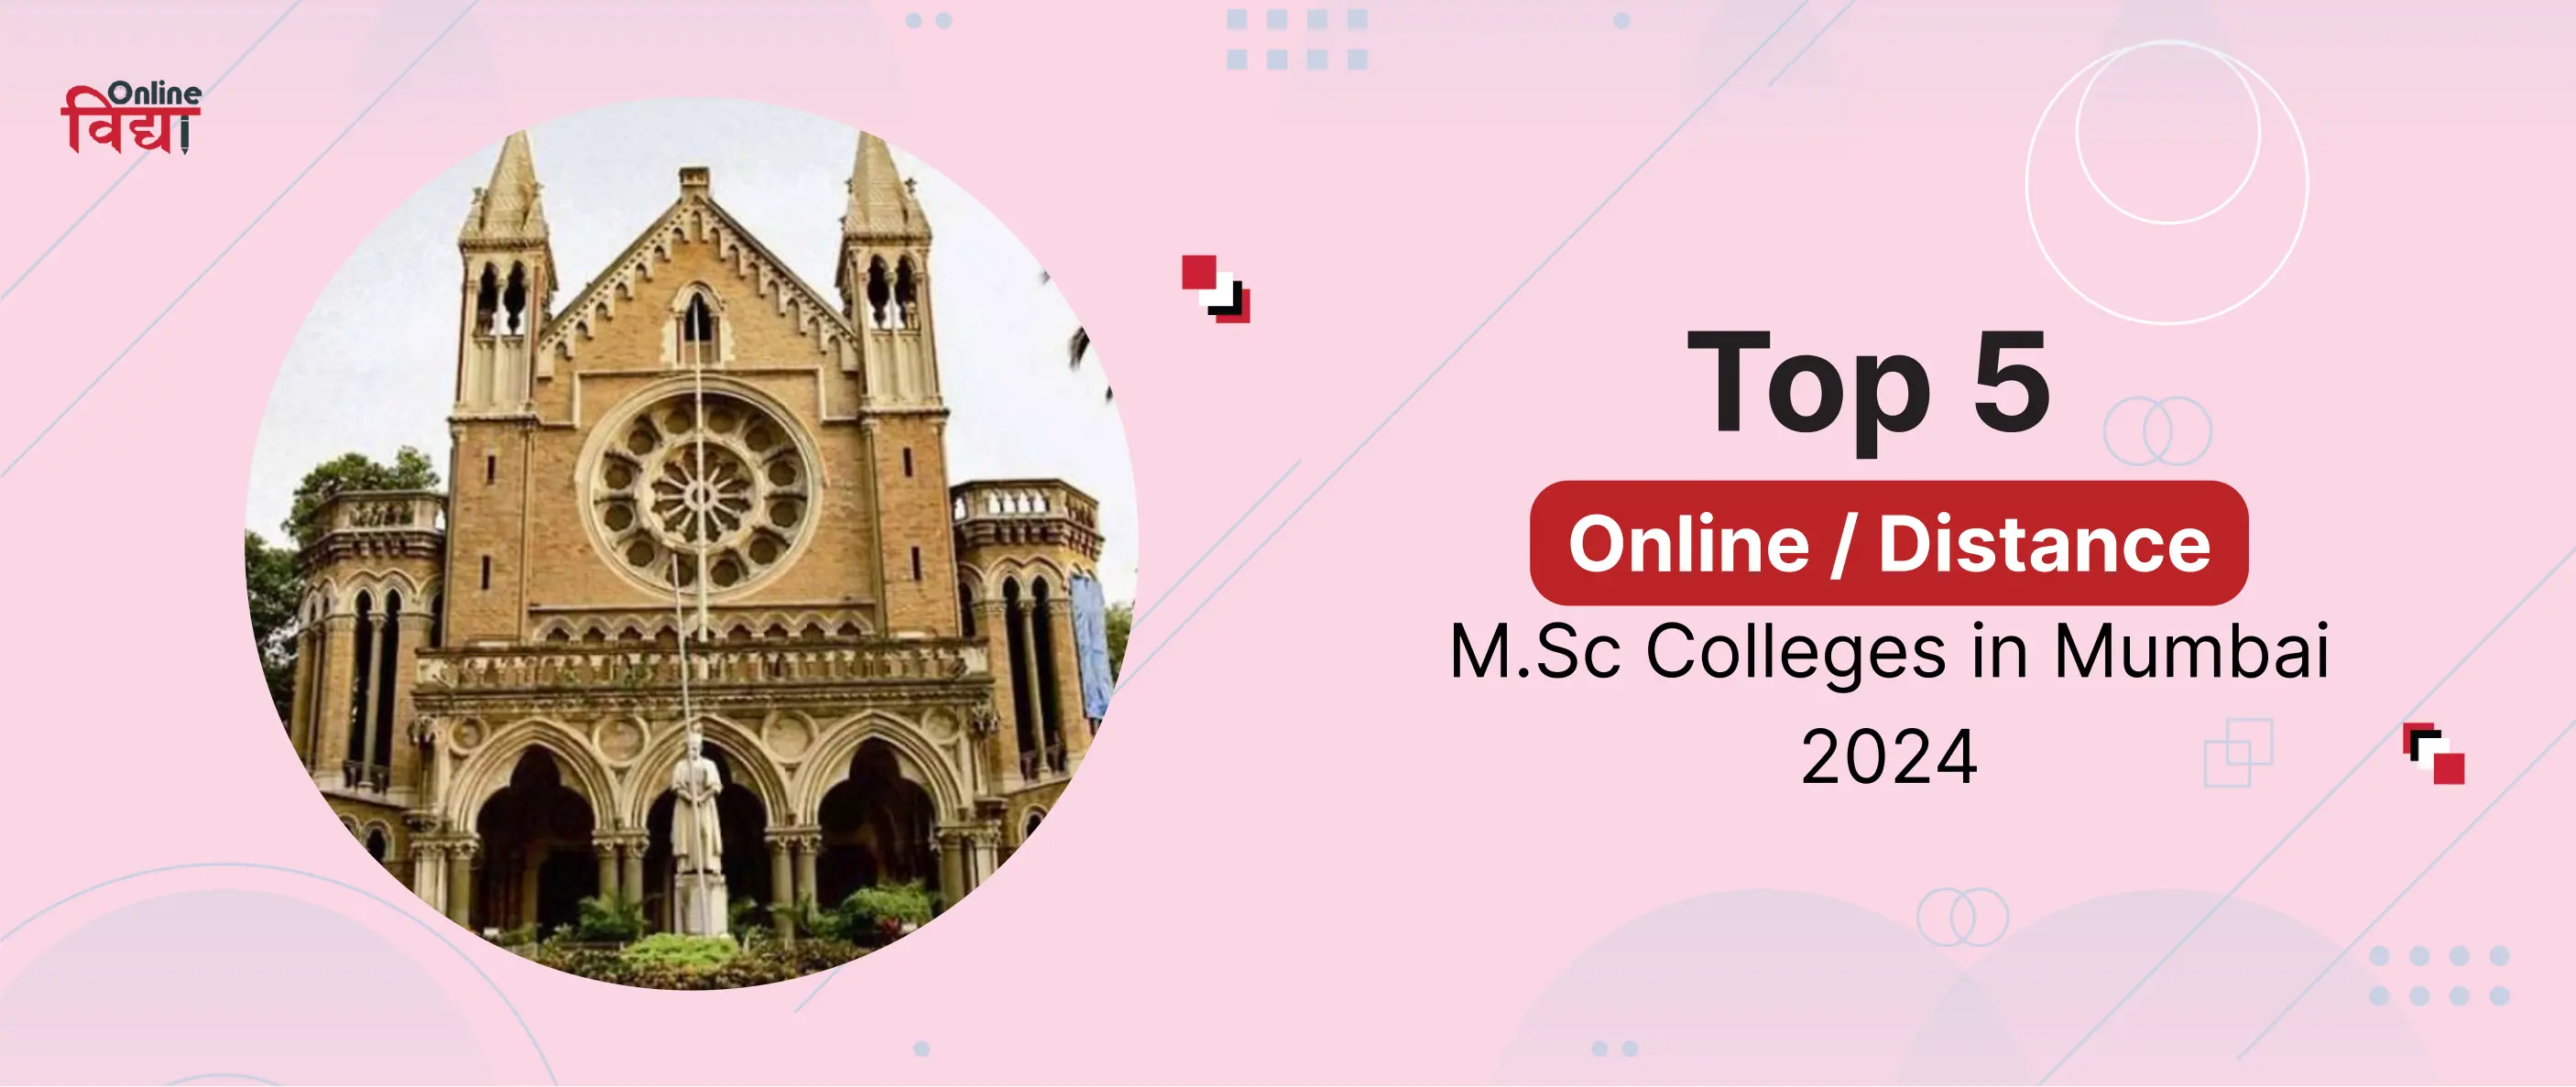 Top 5 Online/Distance M.Sc Colleges in Mumbai 2024